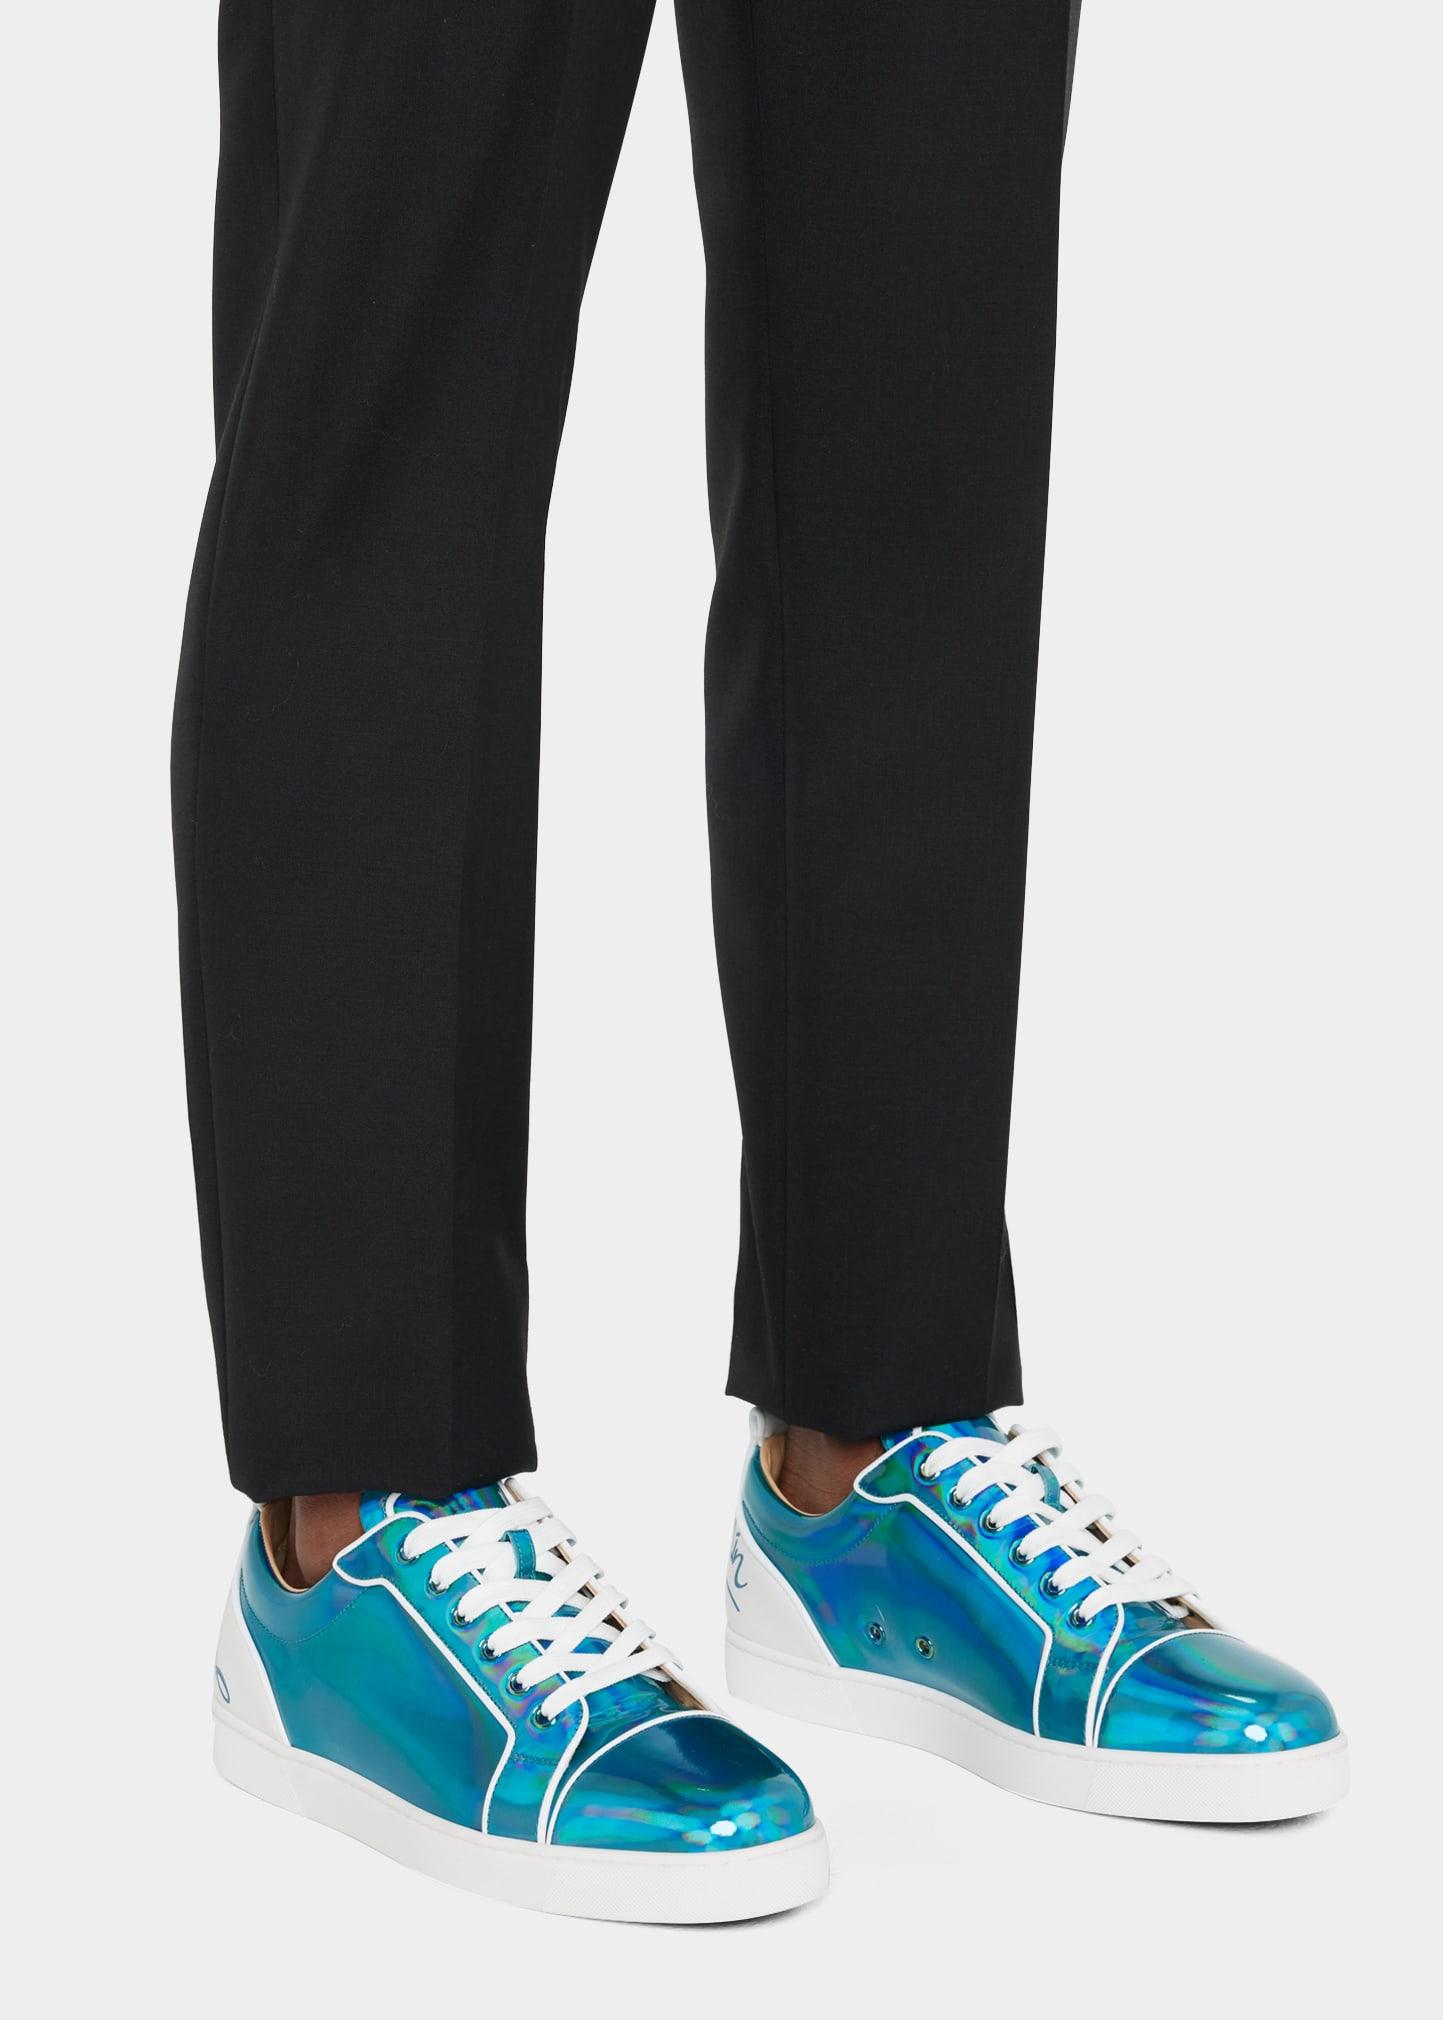 Christian Louboutin Fun Louis Junior Flat Low Top Sneaker in Blue for Men